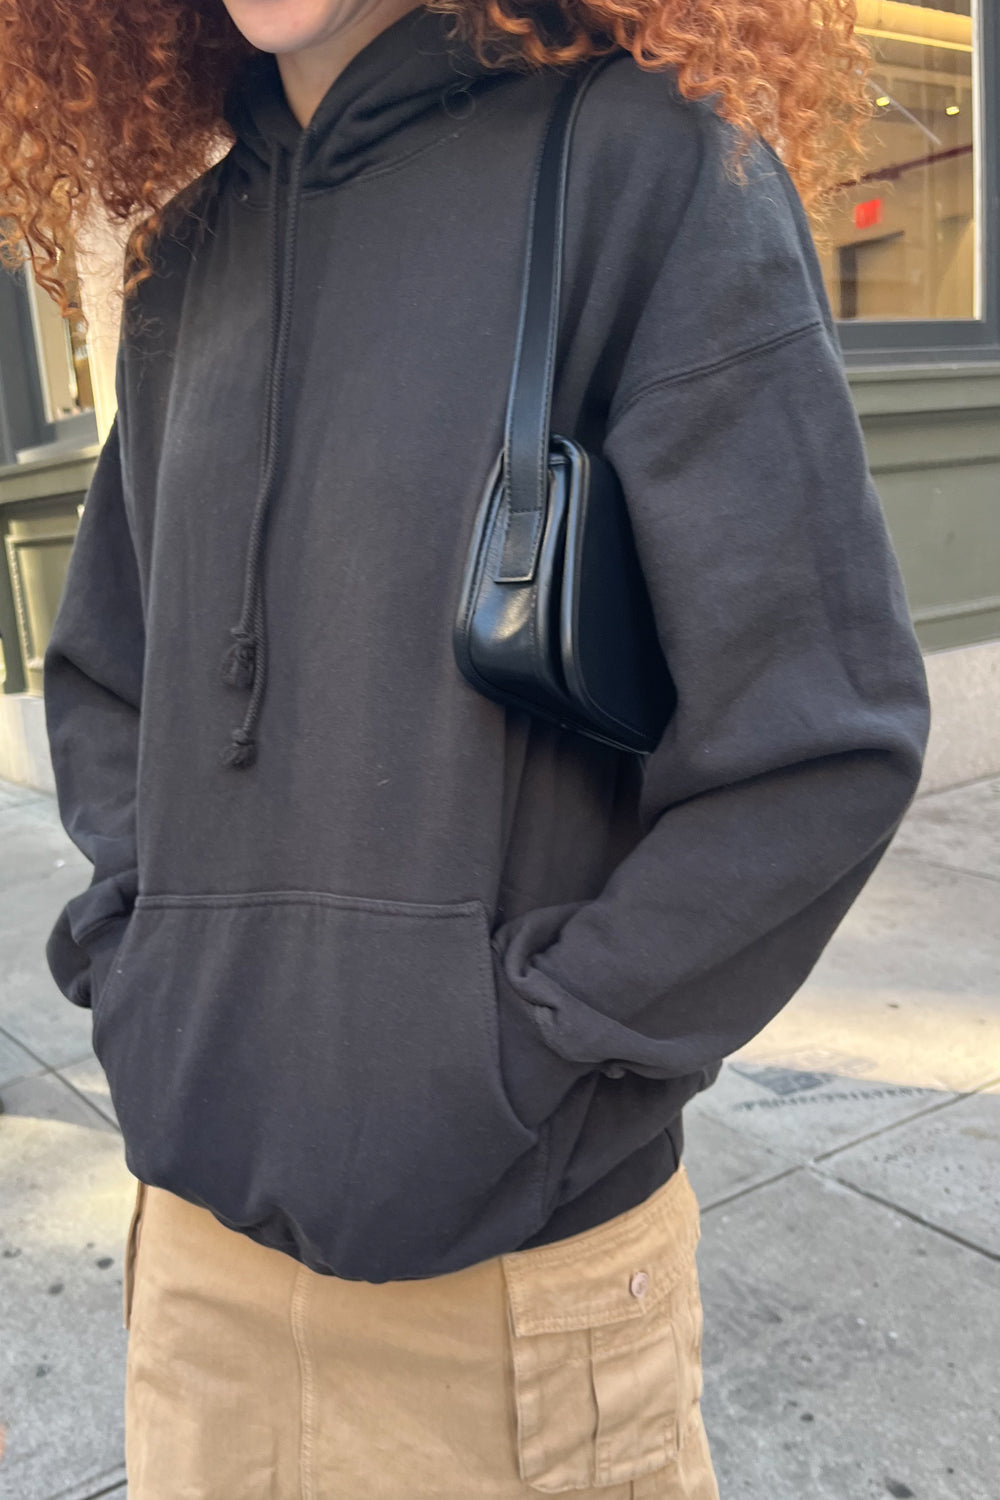 Brandy Melville black leather purse on Mercari